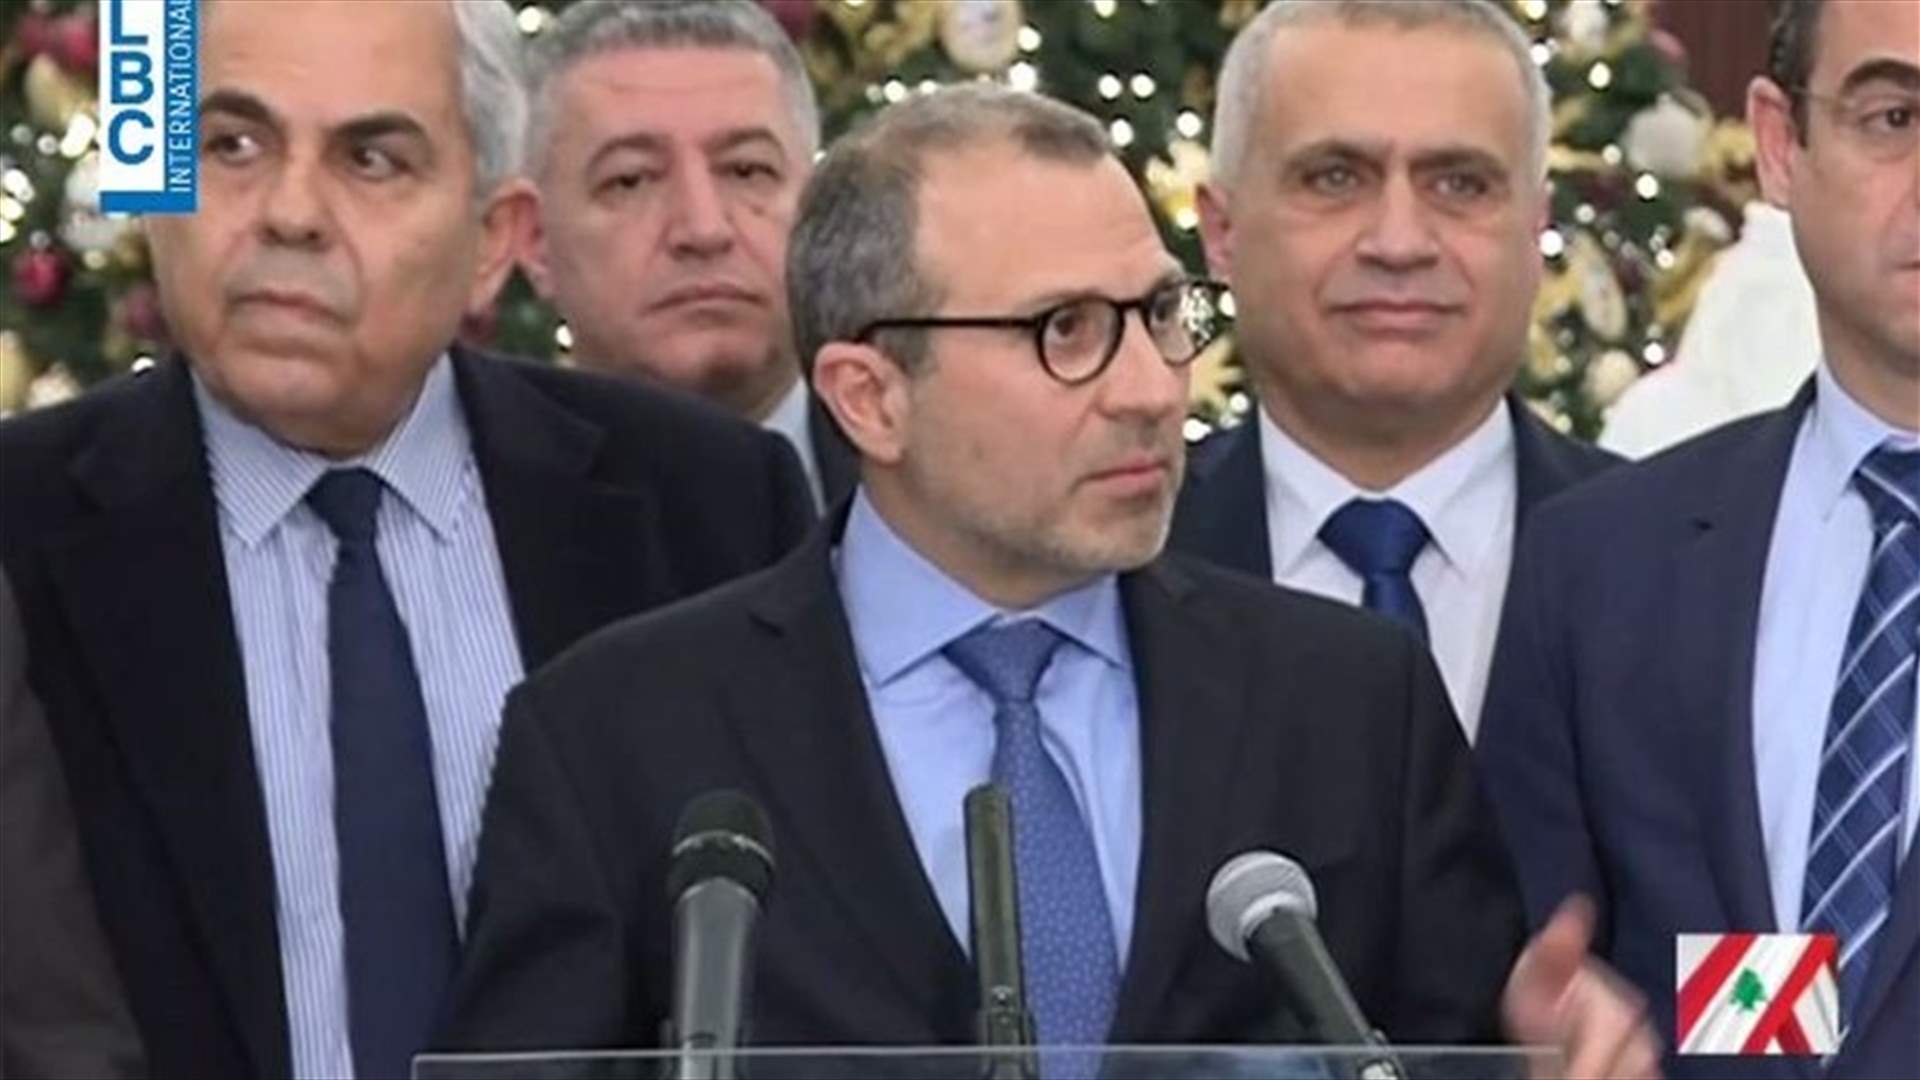 Strong Lebanon bloc nominates Hassan Diab for premiership